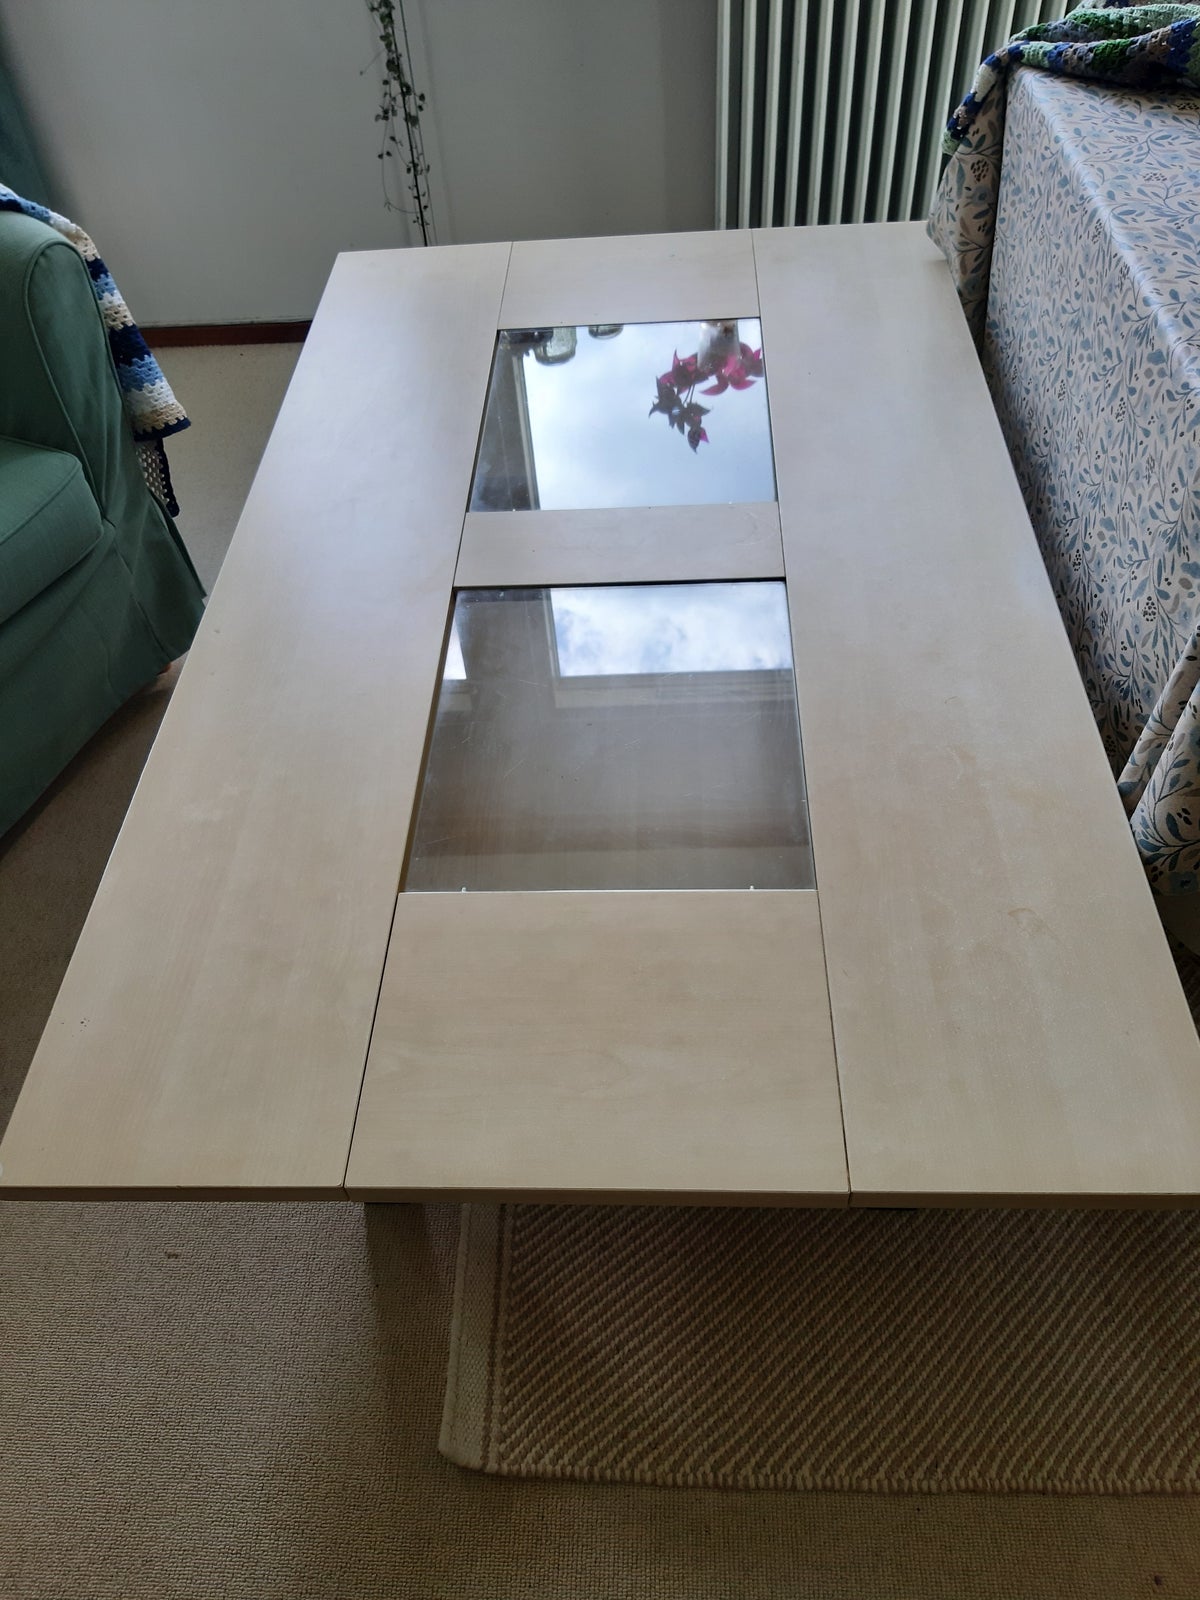 Stuebord med brugsspor.
Mål 1,30×80x50.